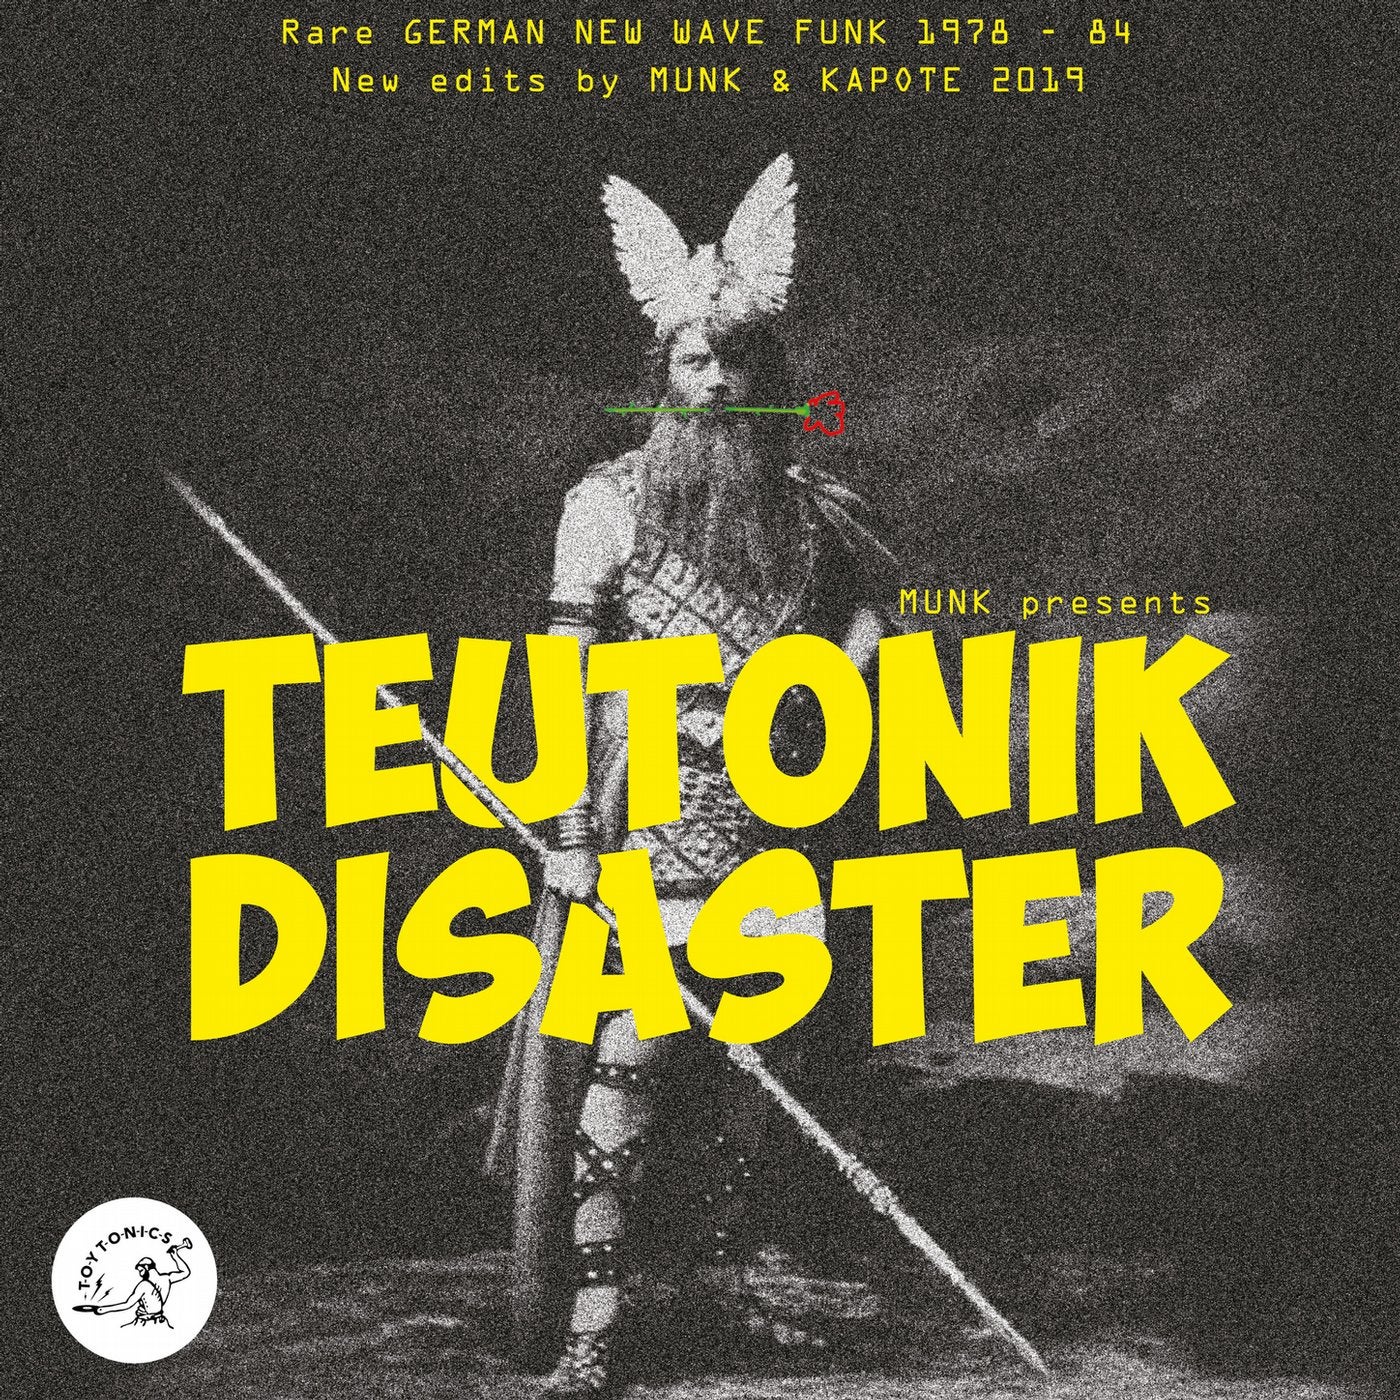 Munk presents Teutonik Disaster